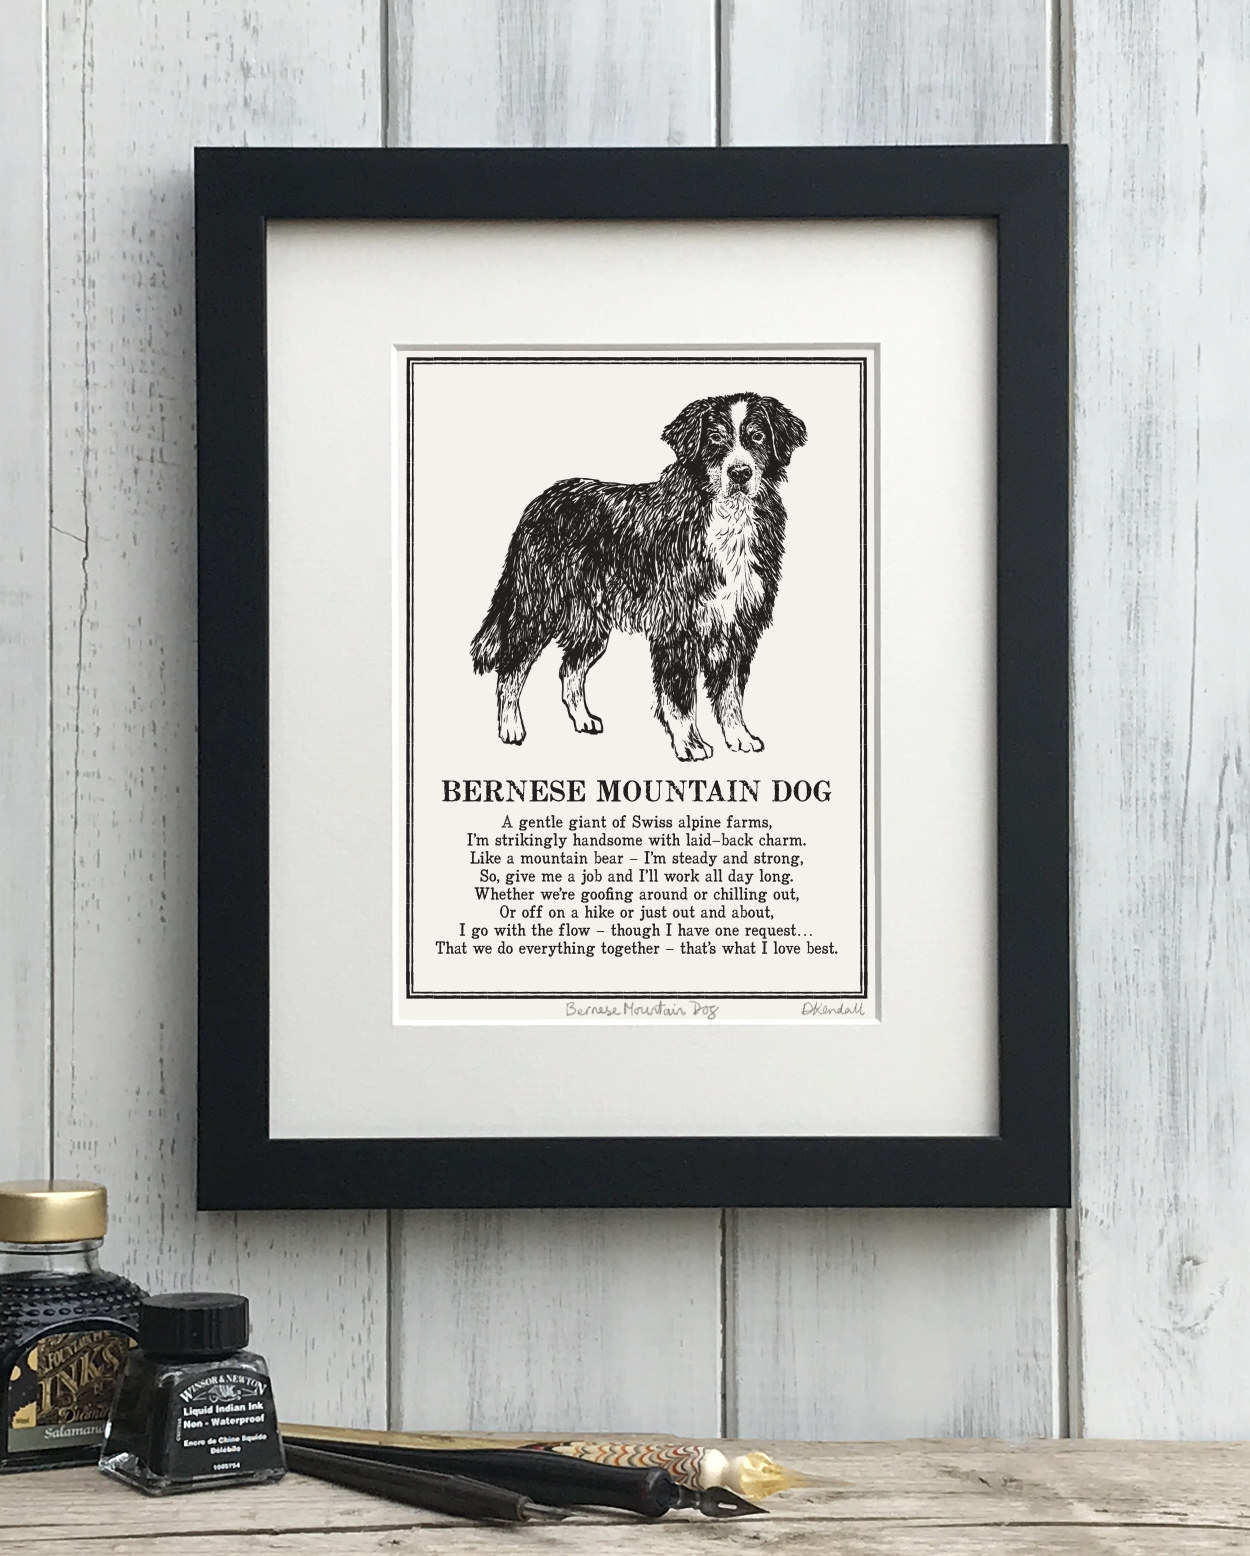 Bernese Mountain Dog Doggerel Illustrated Poem Art Print | The Enlightened Hound